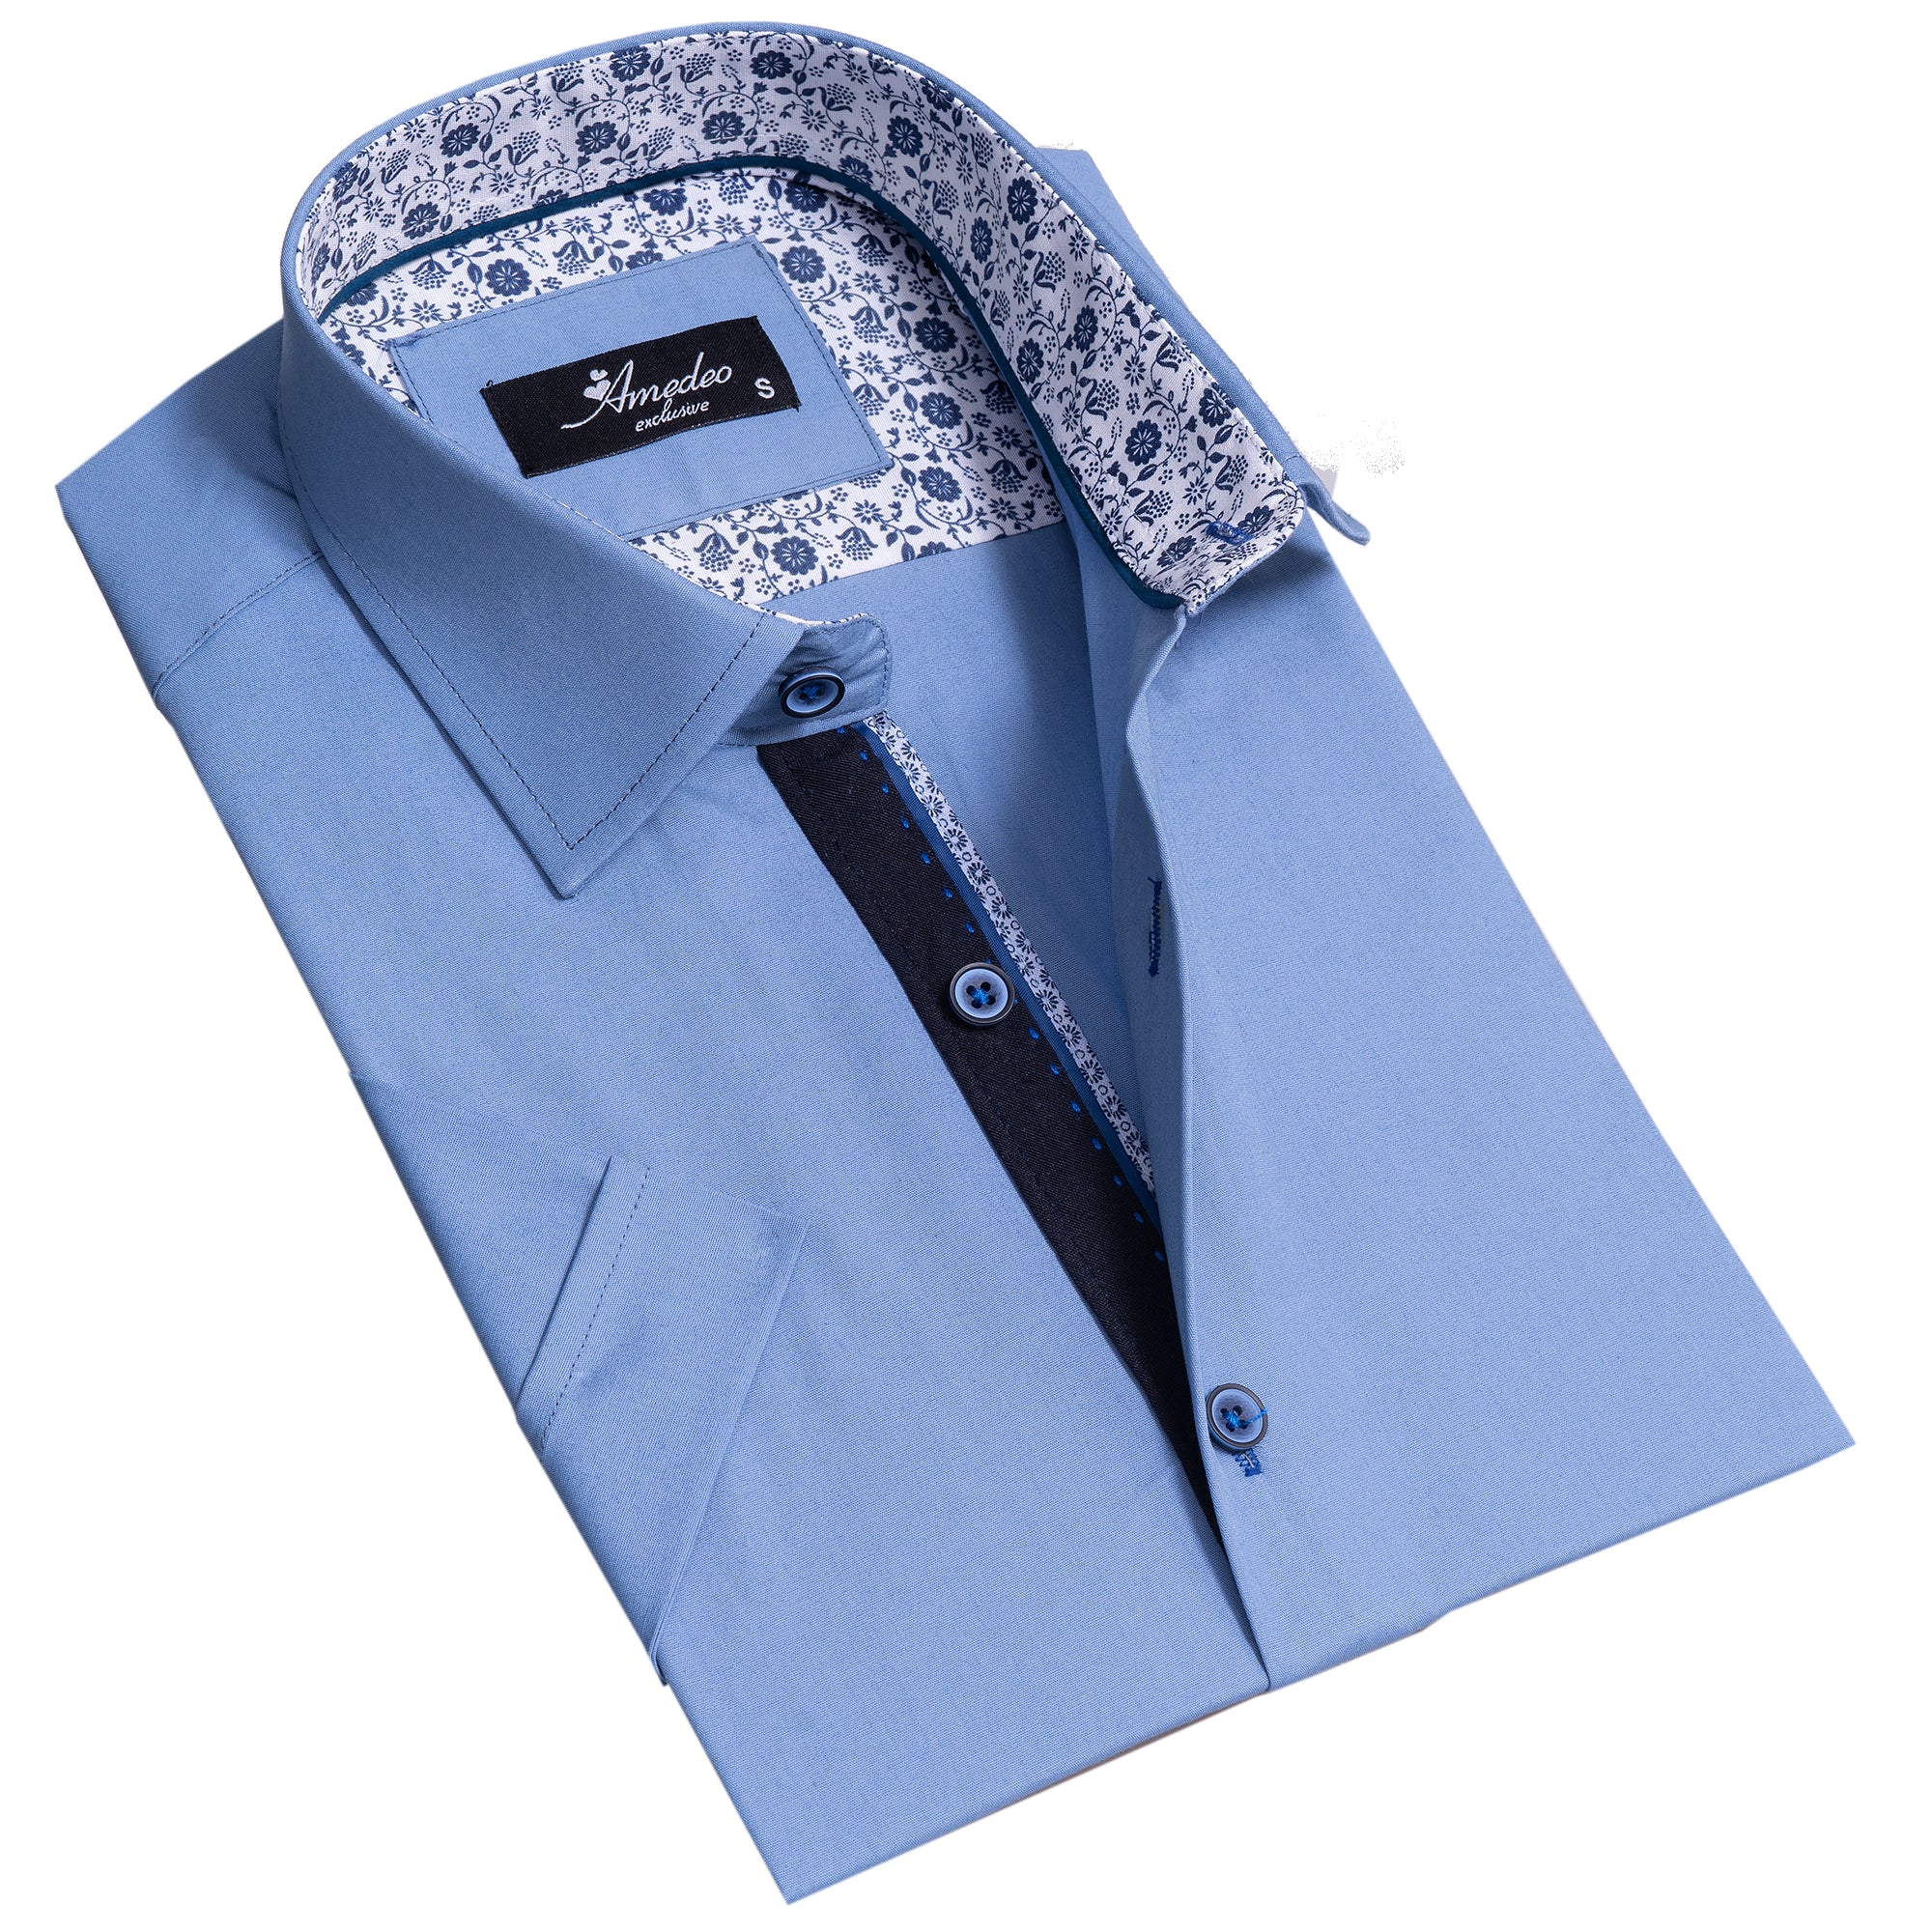 Shop Men's Short & Long Sleeve Button Ups